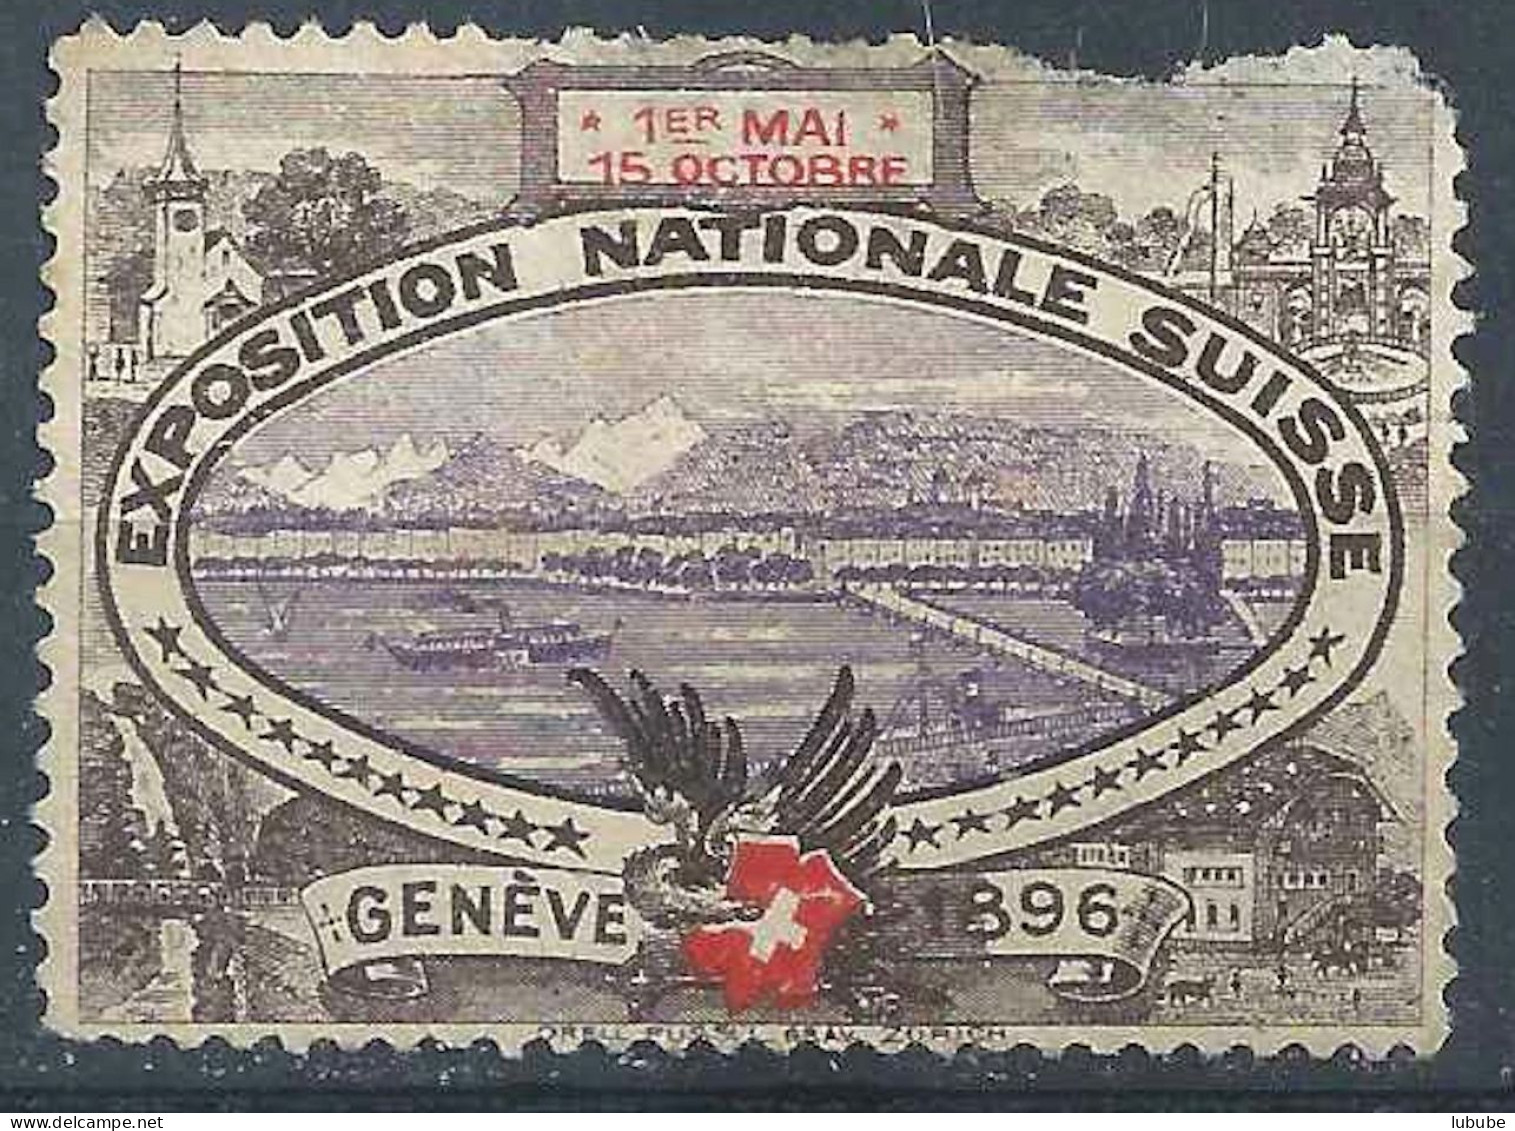 Vignette  "Exposition Nationale Suisse, Genève"       1896 - Unused Stamps